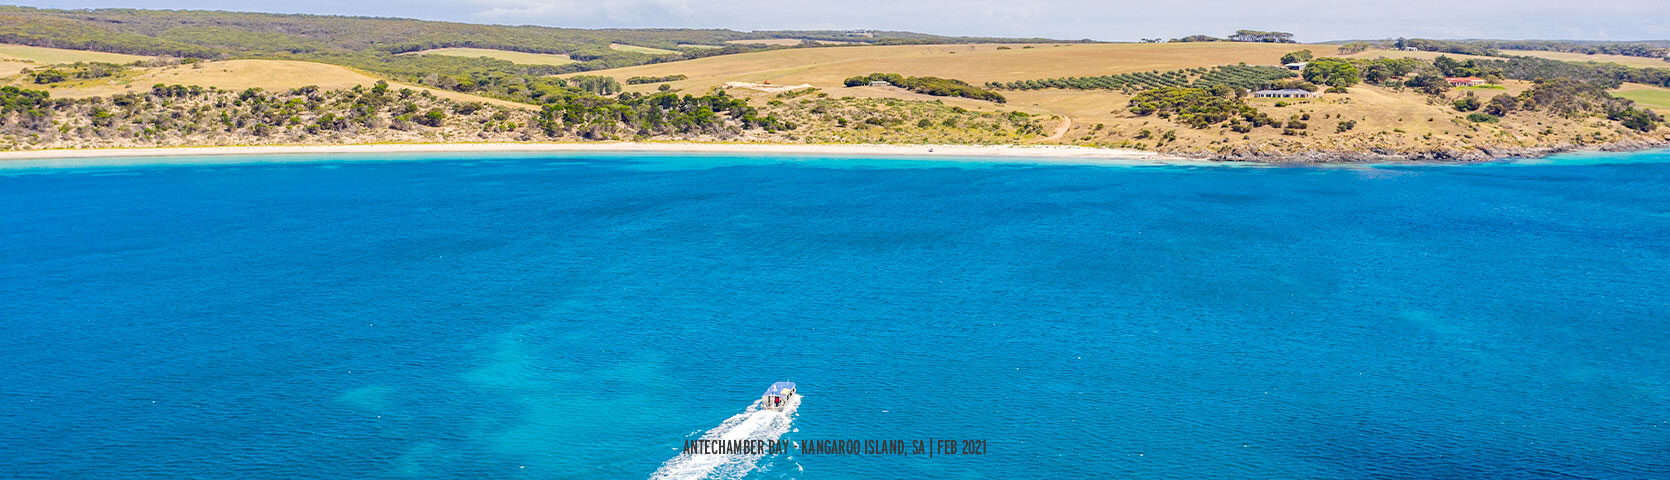 Antechamber-Bay,-Kangaroo-Island,-South-Australia